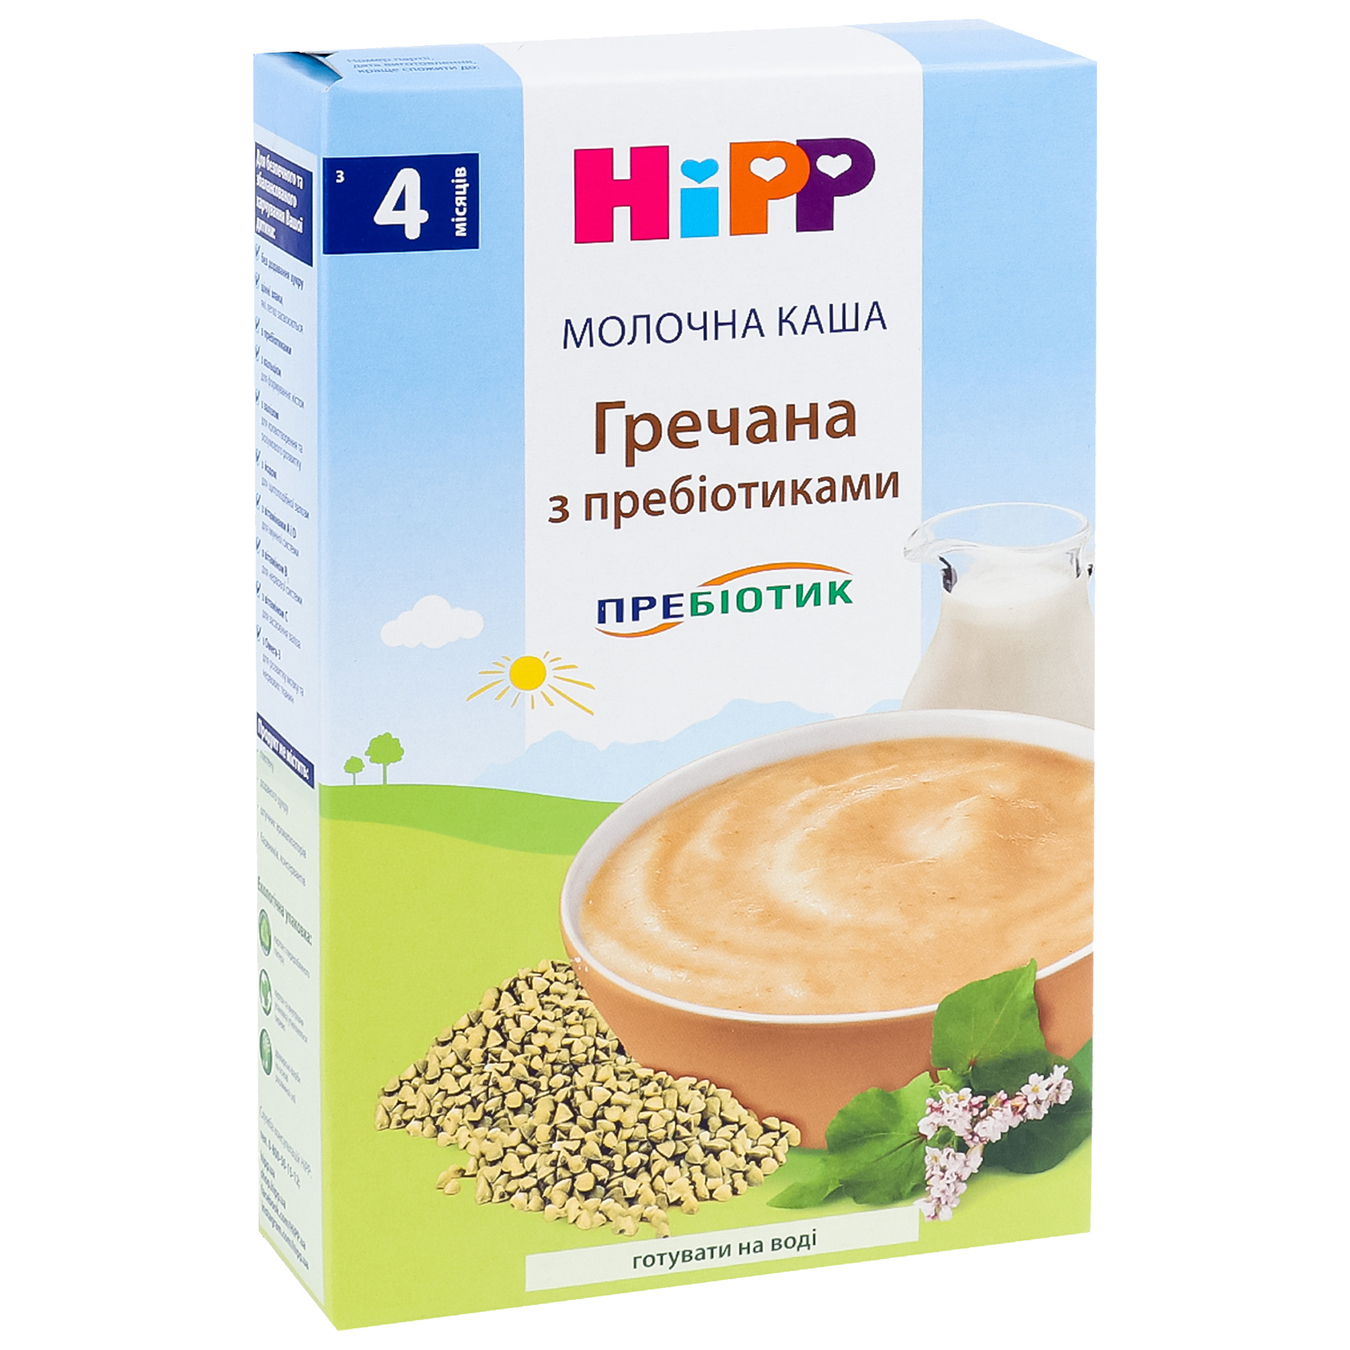 Hipp buckwheat porridge with prebiotics 250g 4